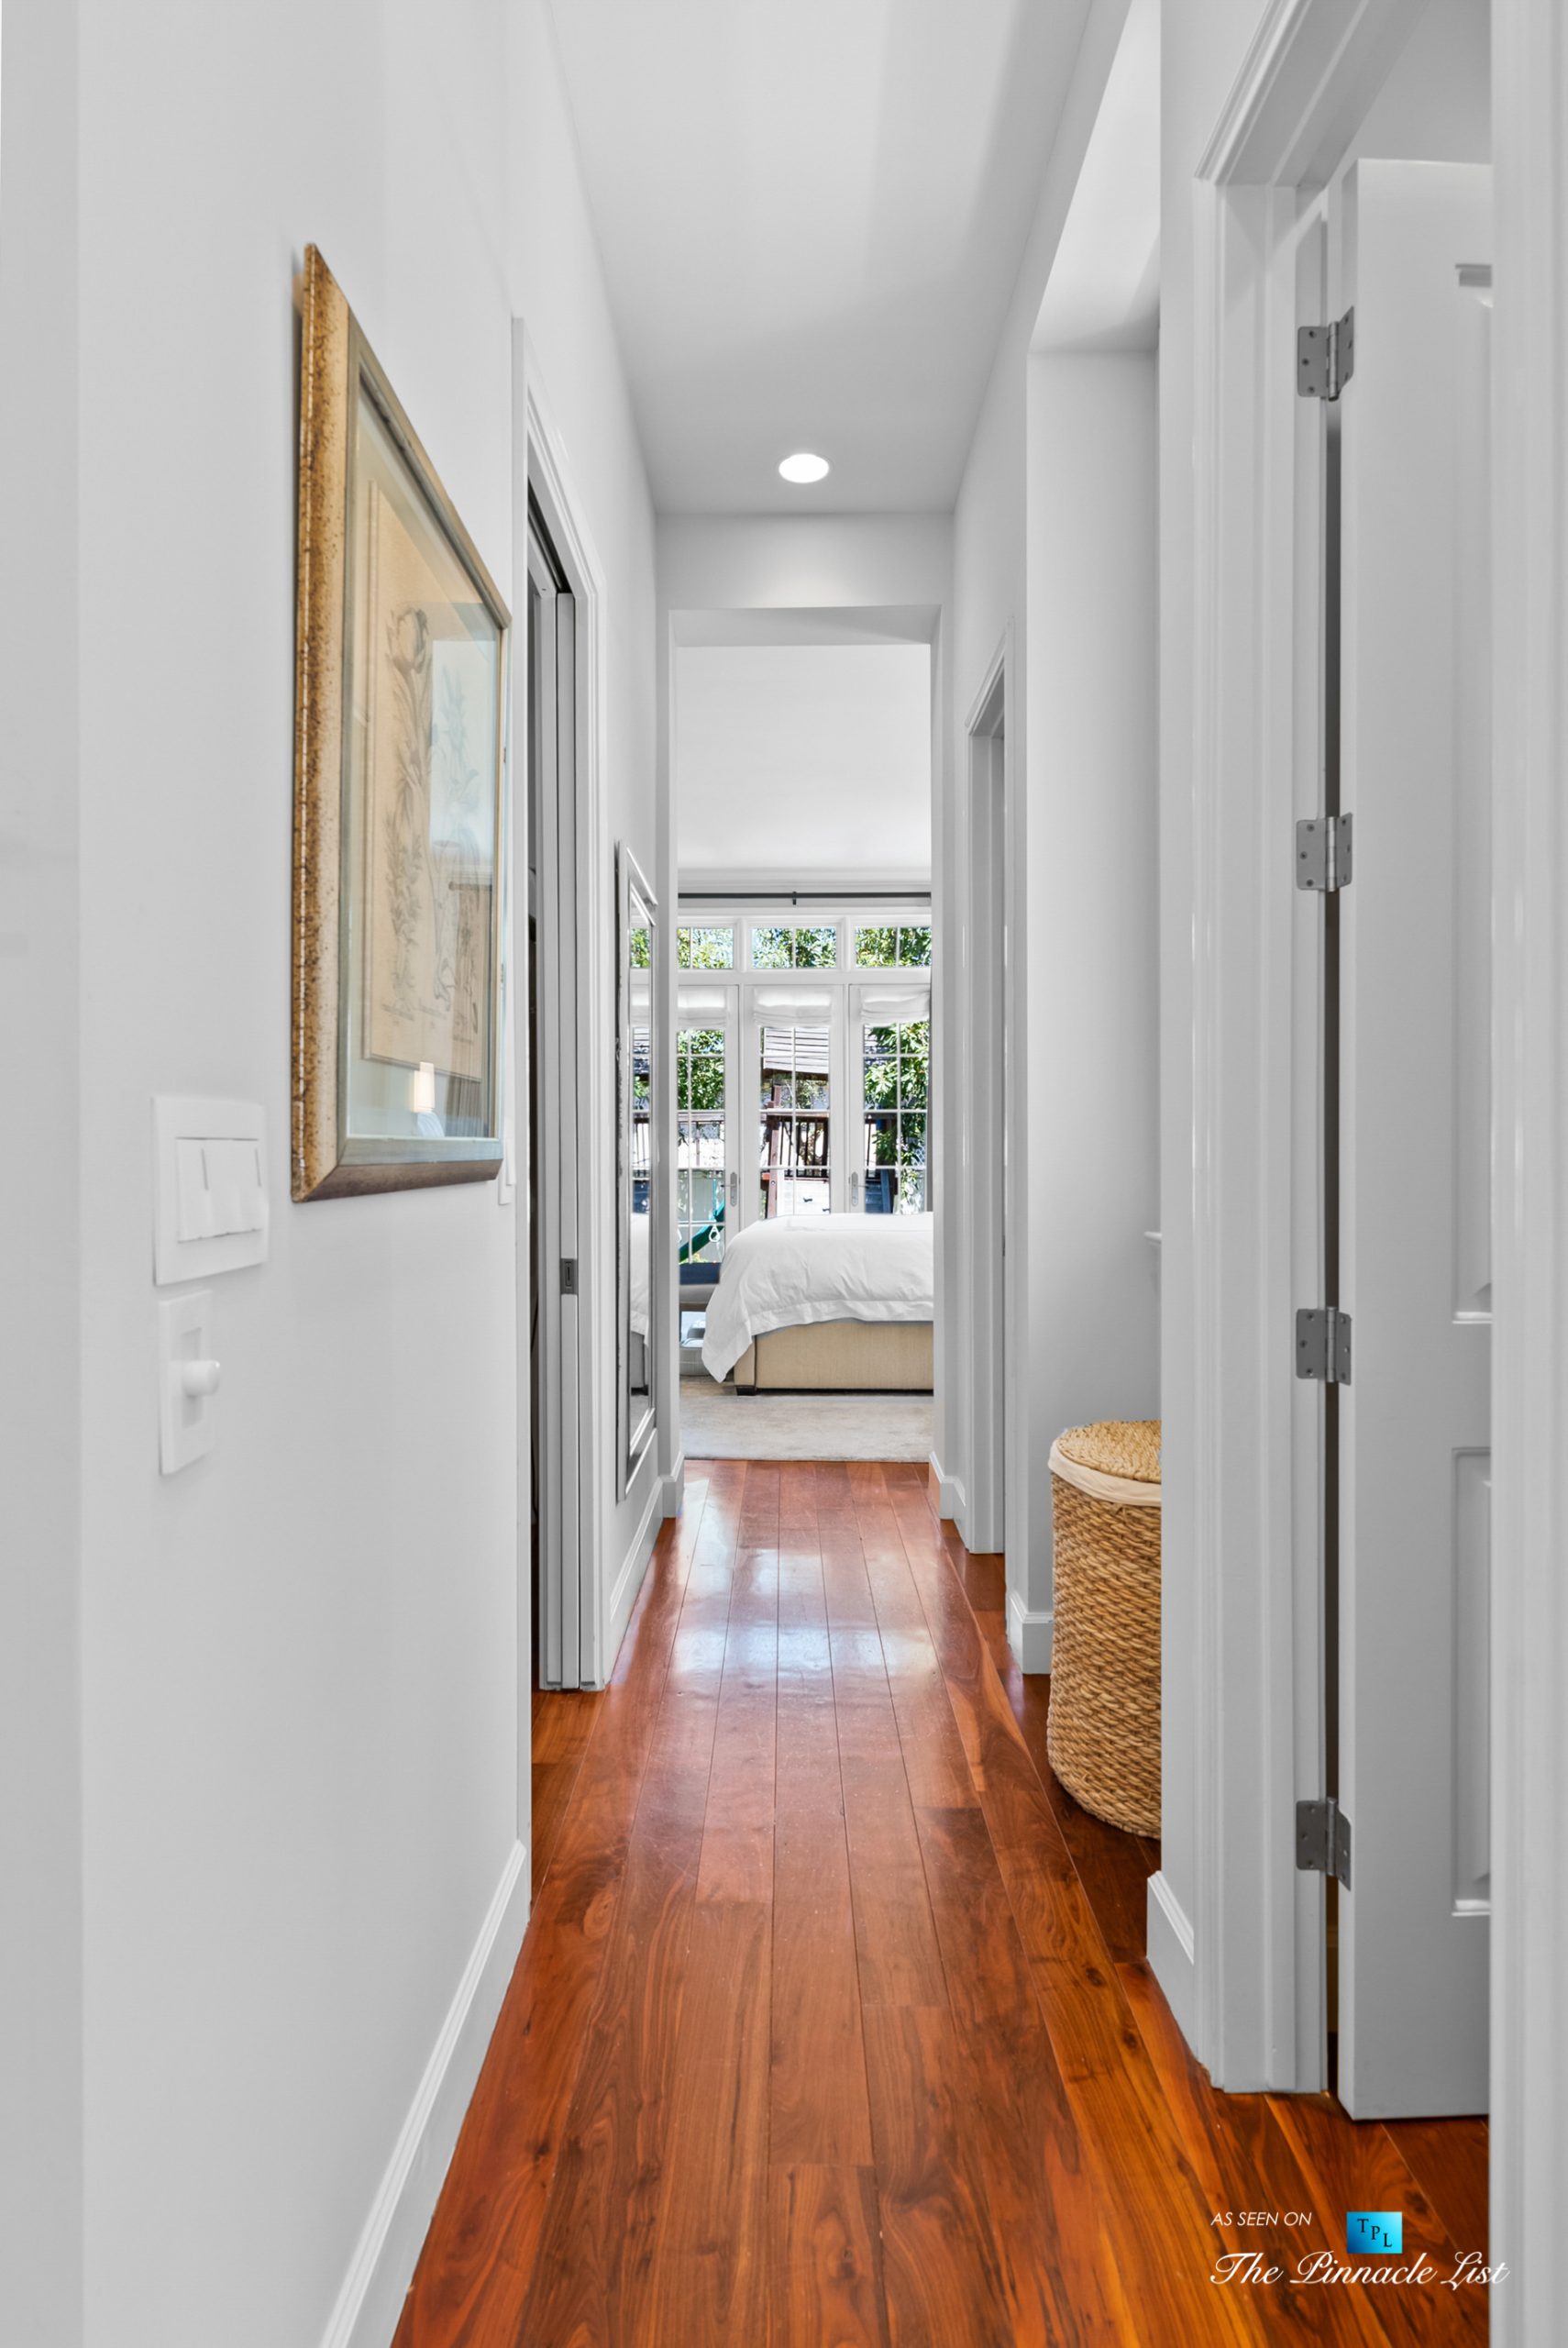 877 8th Street, Manhattan Beach, CA, USA – Main Level Hallway to Master Bedroom